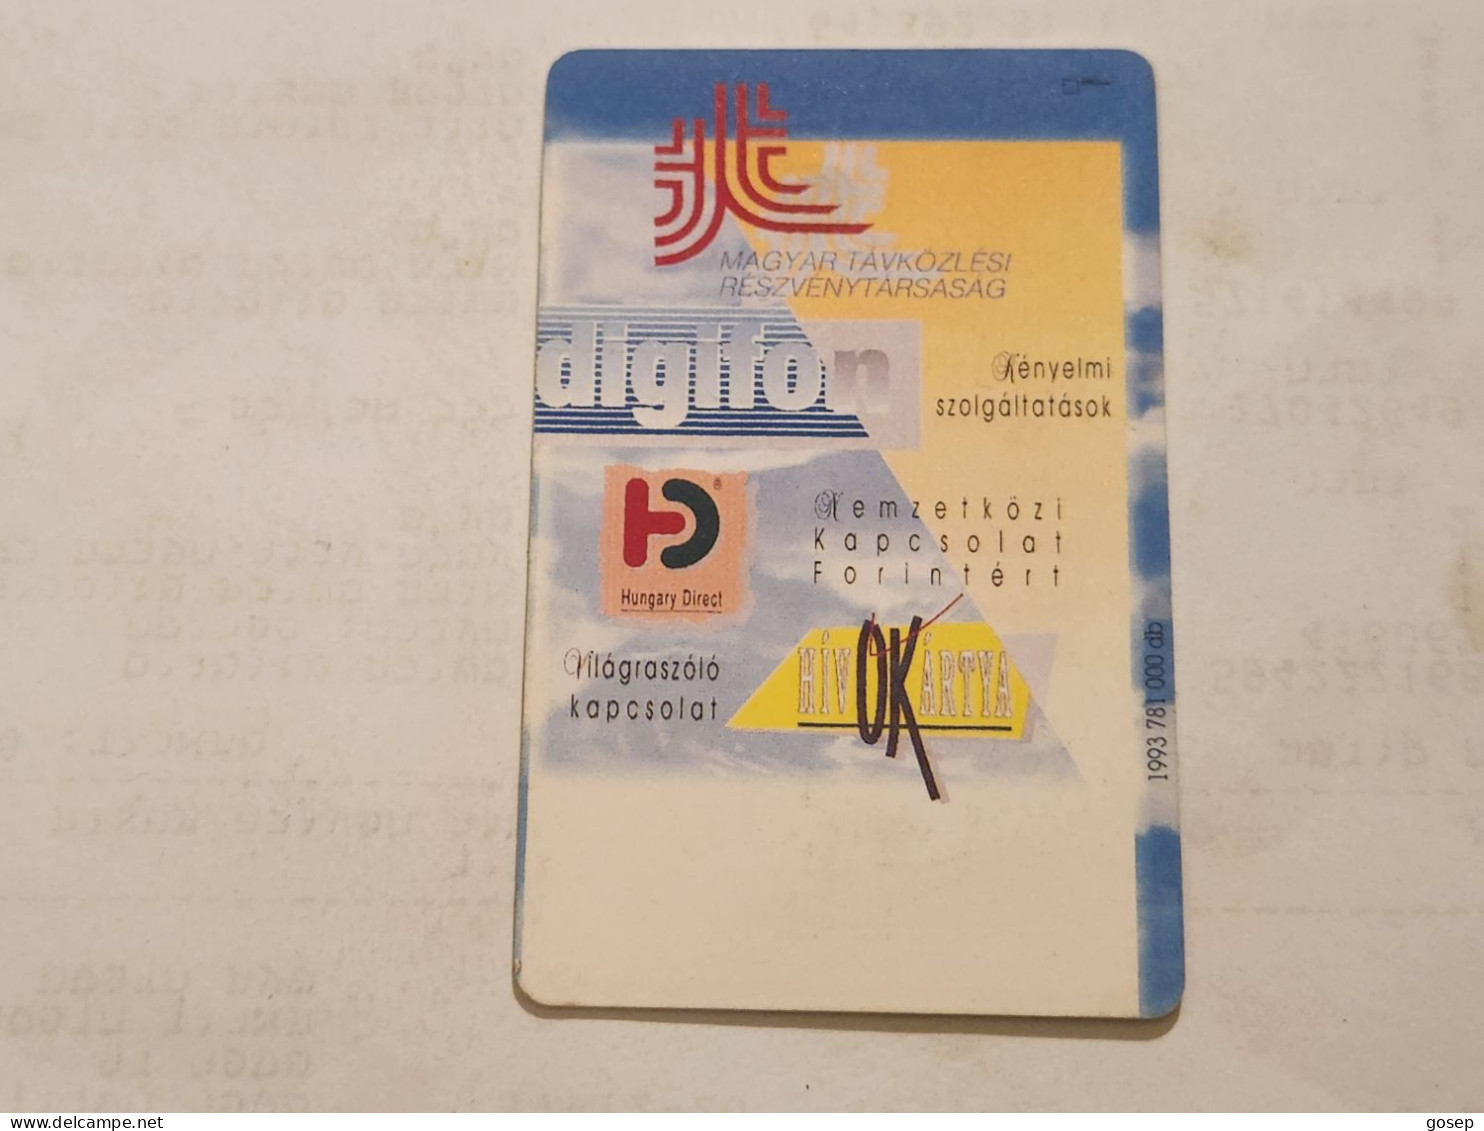 HUNGARY-(HU-P-1993-32Aa)-MATAV-(178)(500units)(11/93)(tirage-781.000)-USED CARD+1card Prepiad Free - Ungarn